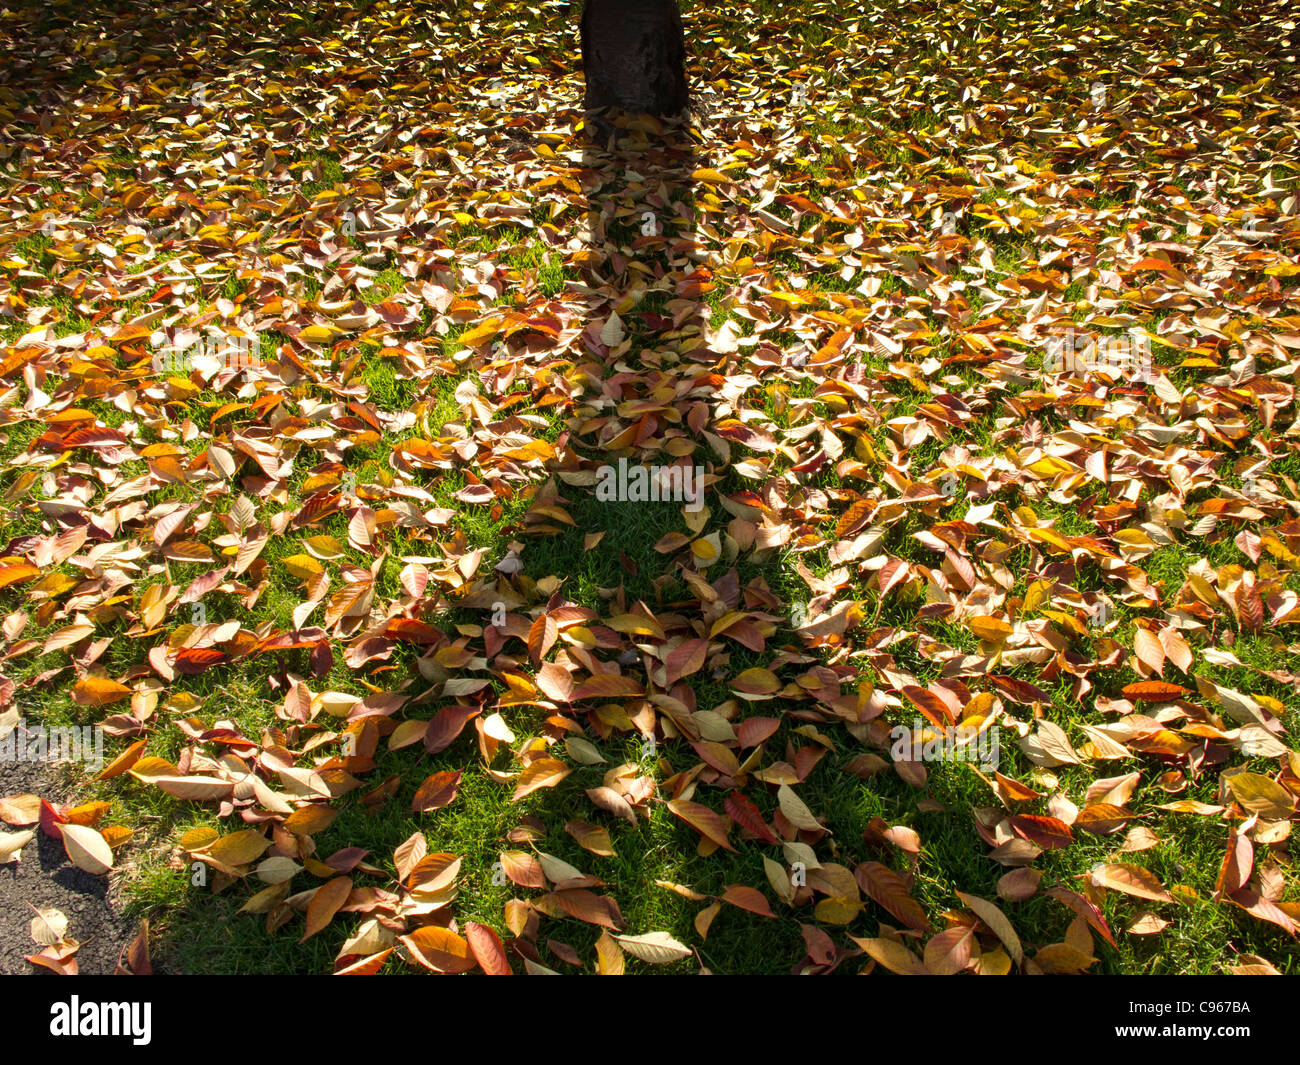 Autumn leafs blanketing ground. Stock Photo